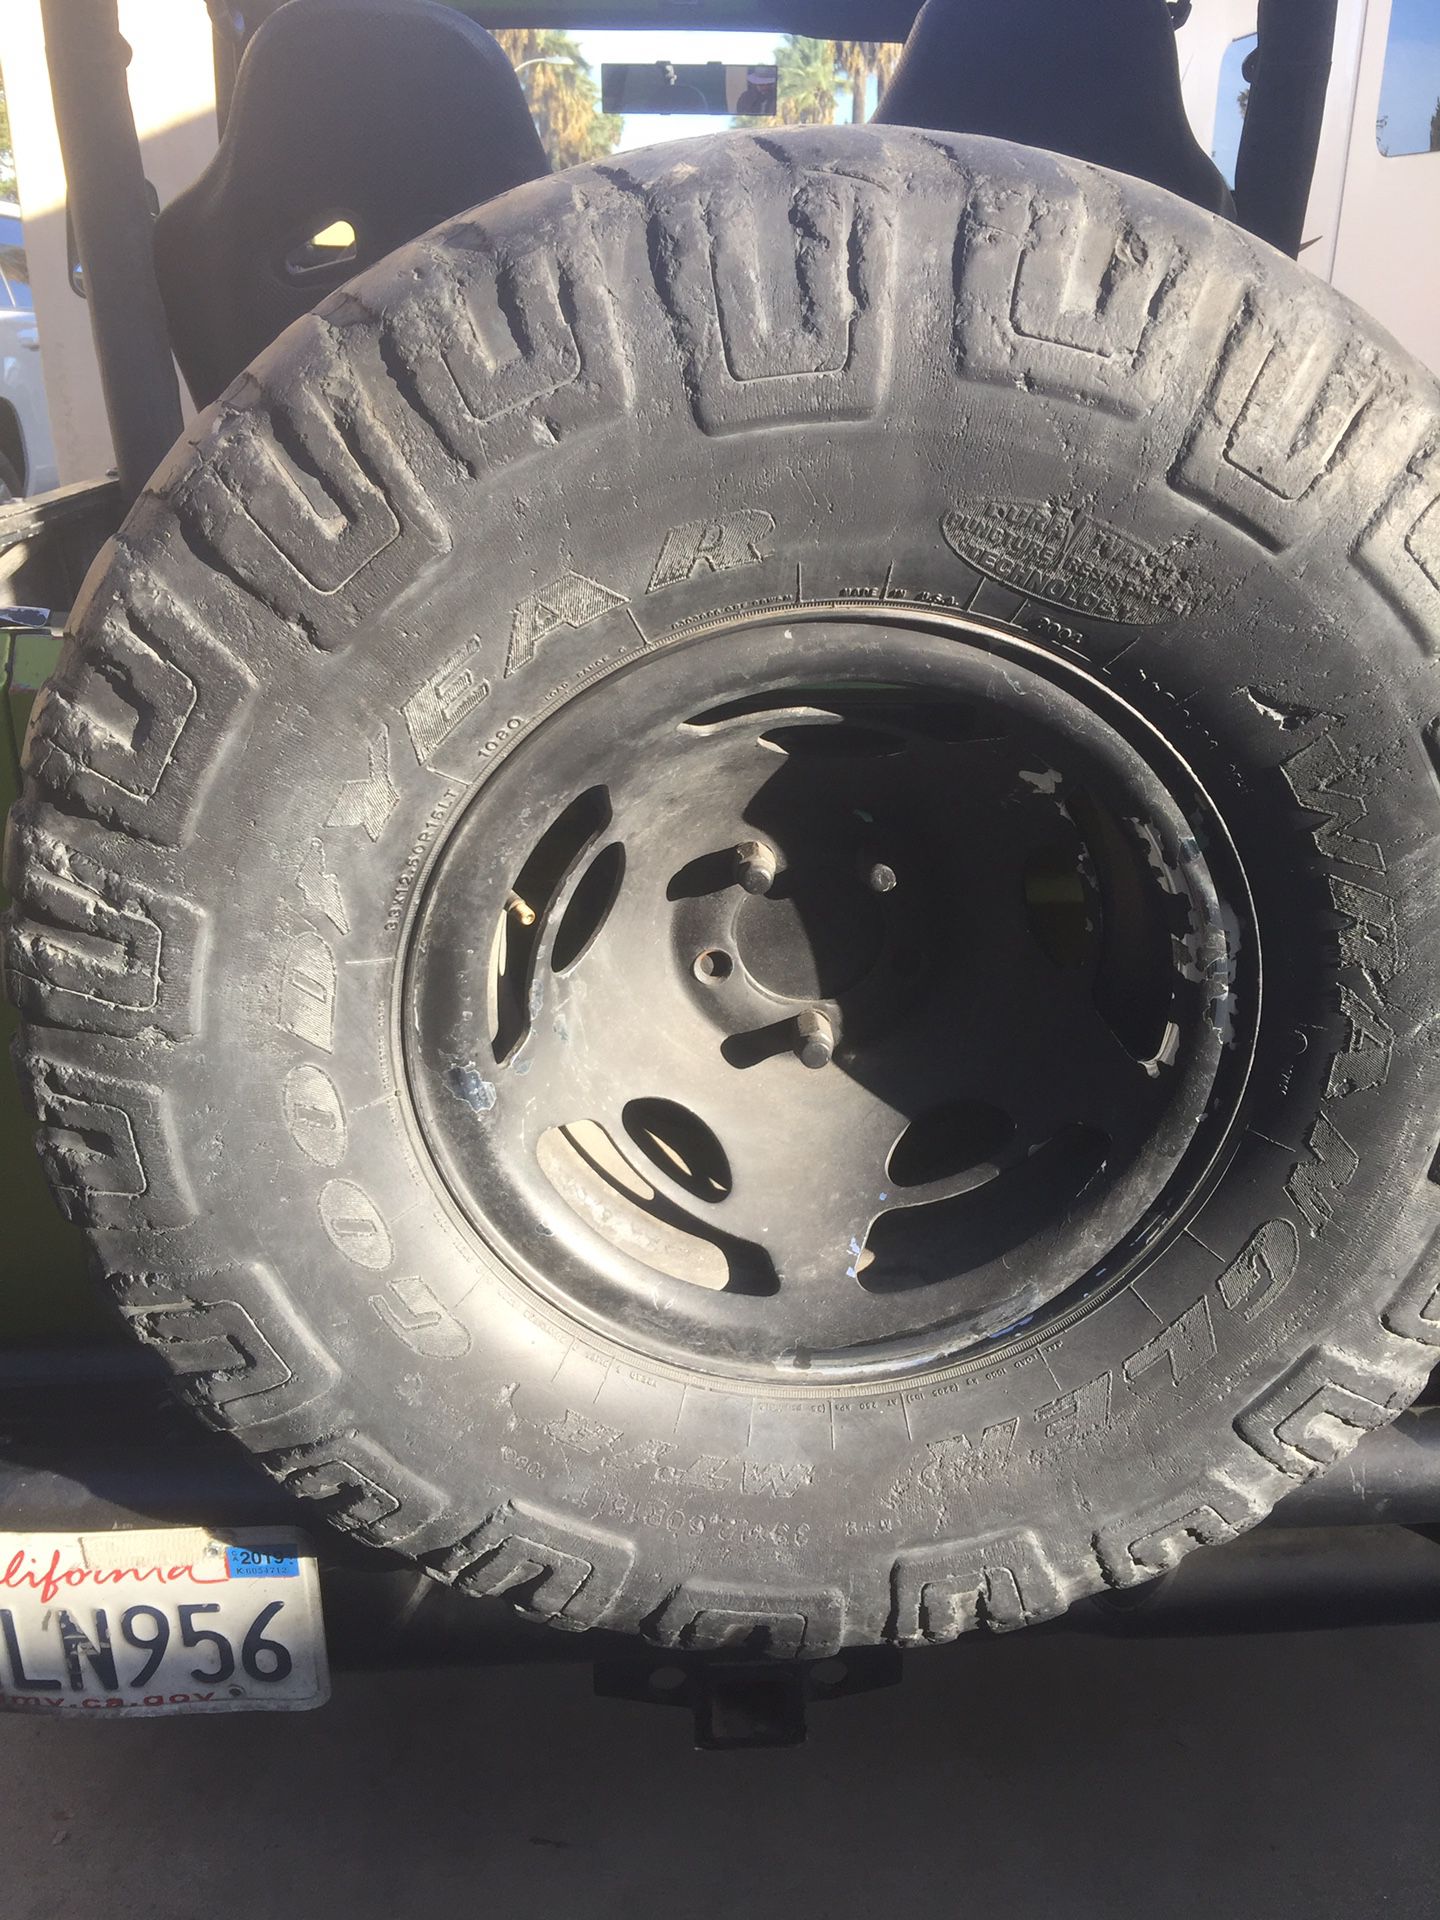 33x12.50r15 black steel wheel with Goodyear wrangler tire rim good for spare Jeep yj tj xj